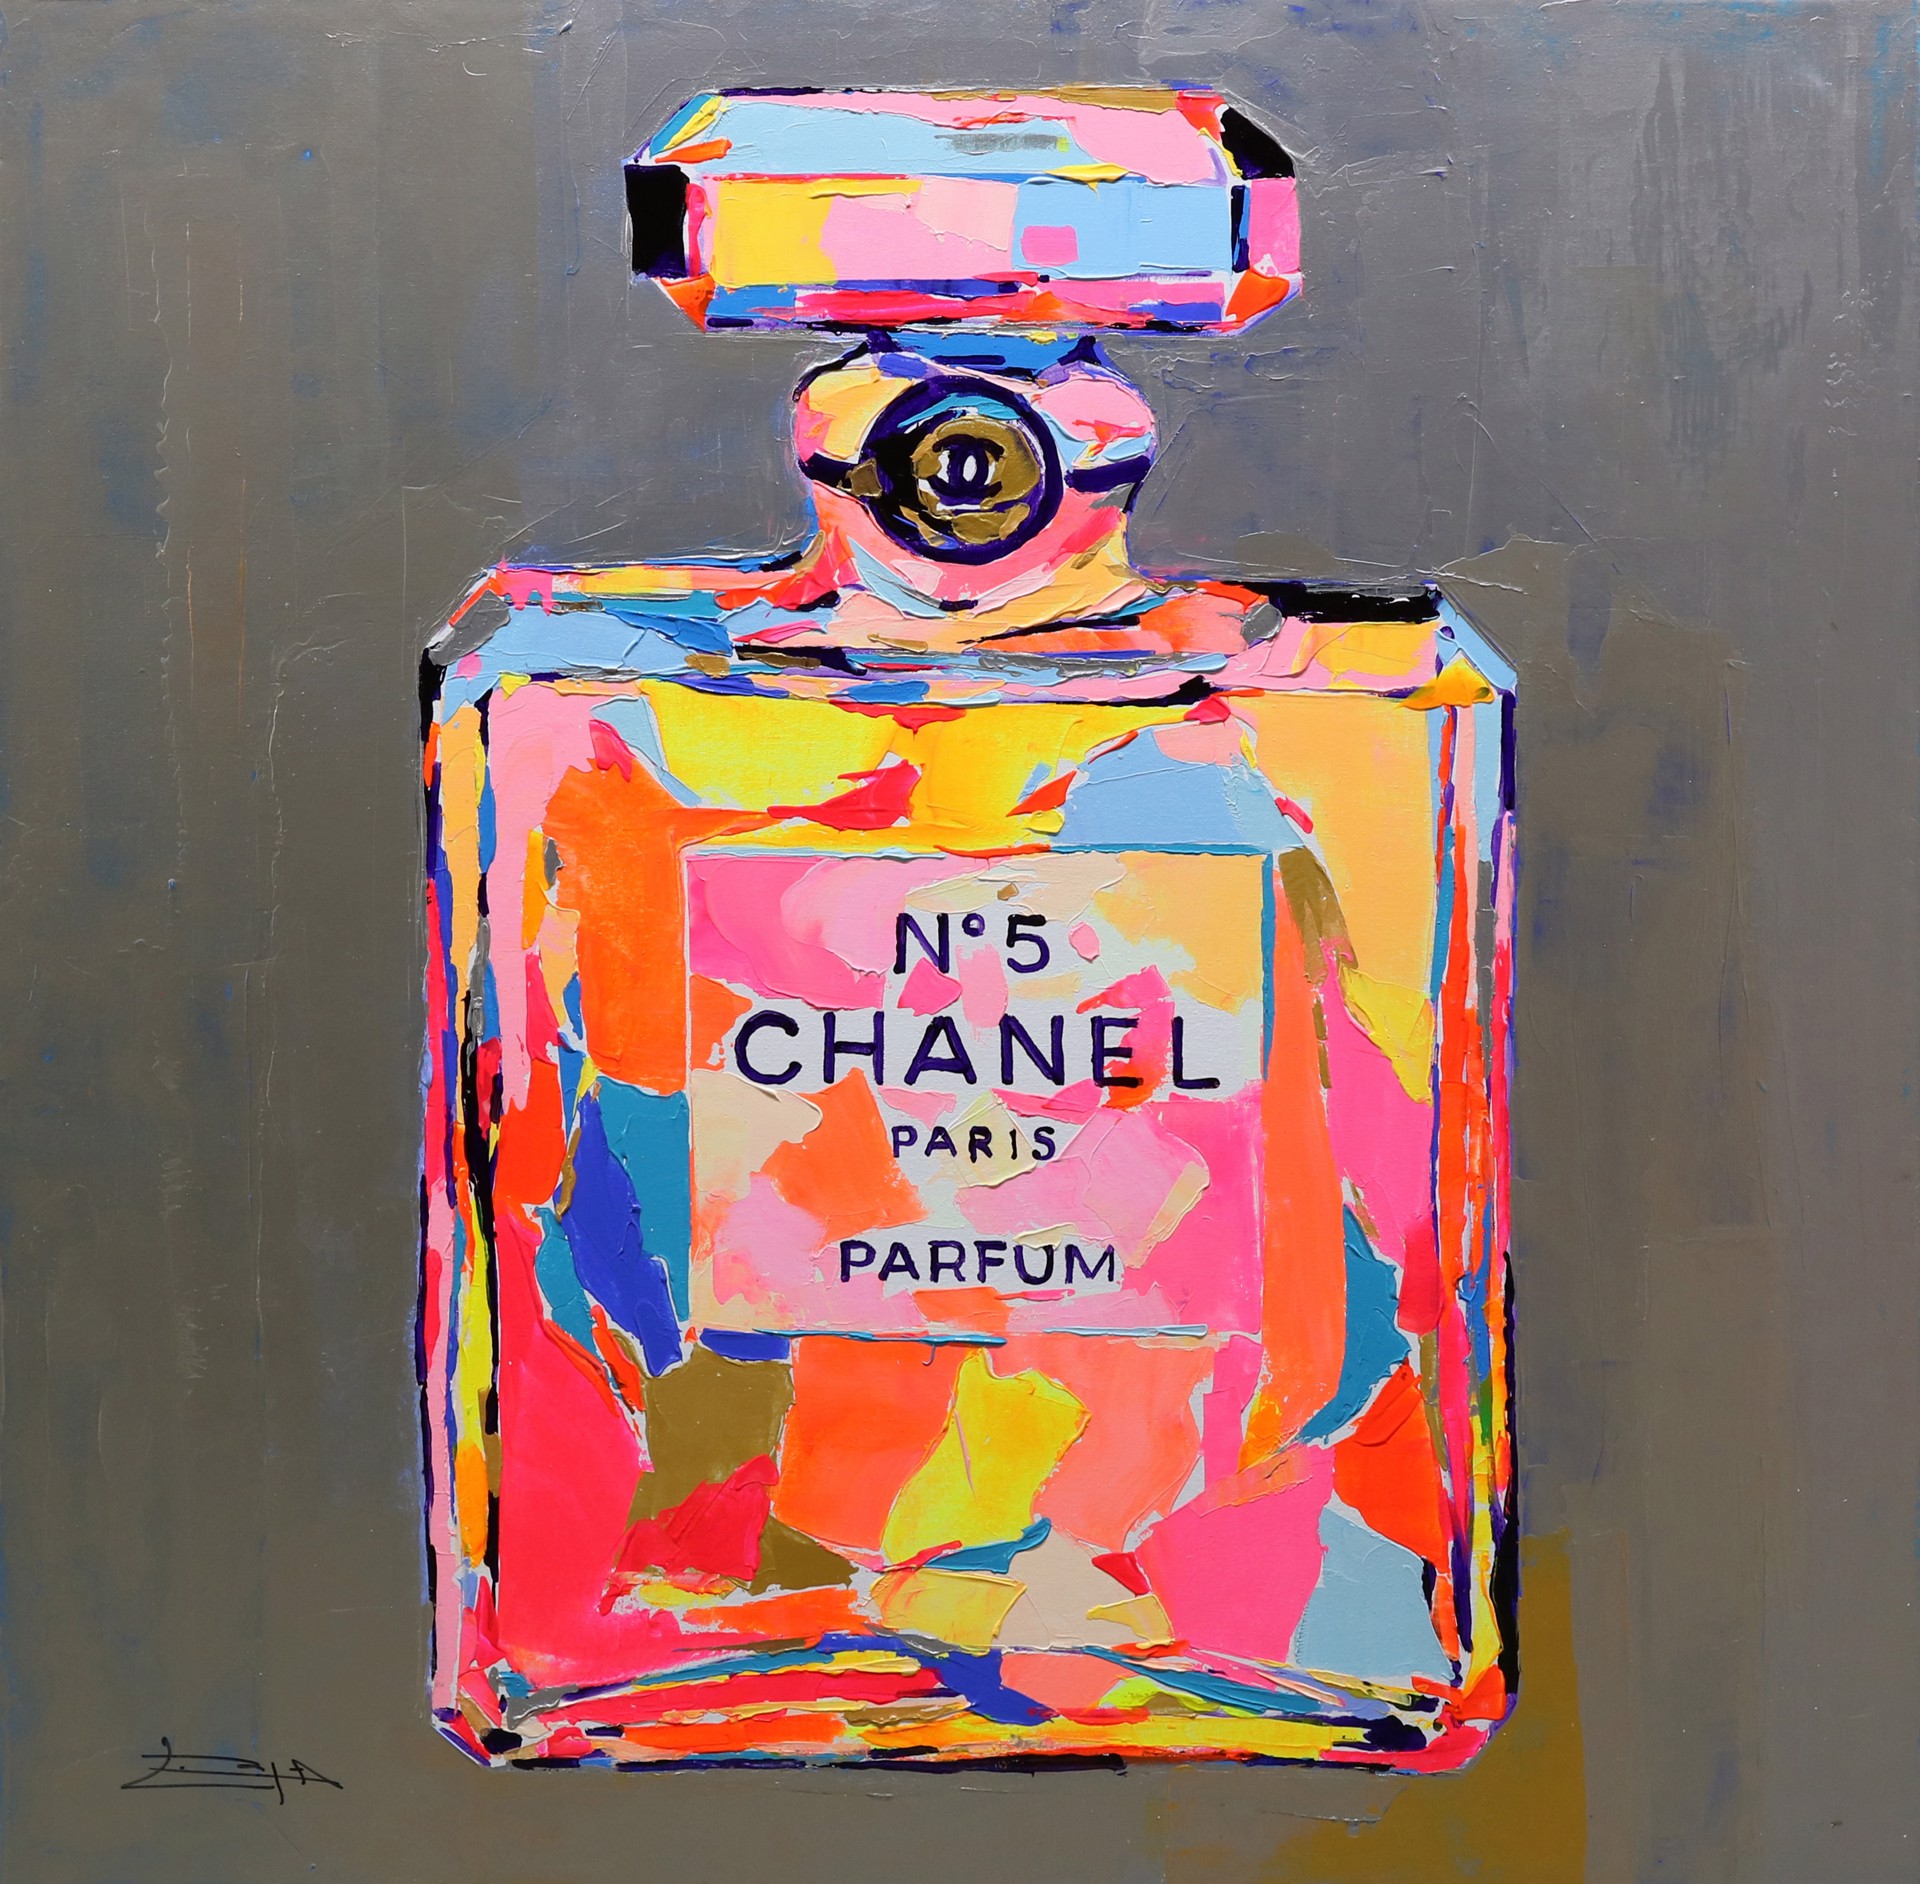 Chanel No.5 Parfum by Federico López Córcoles